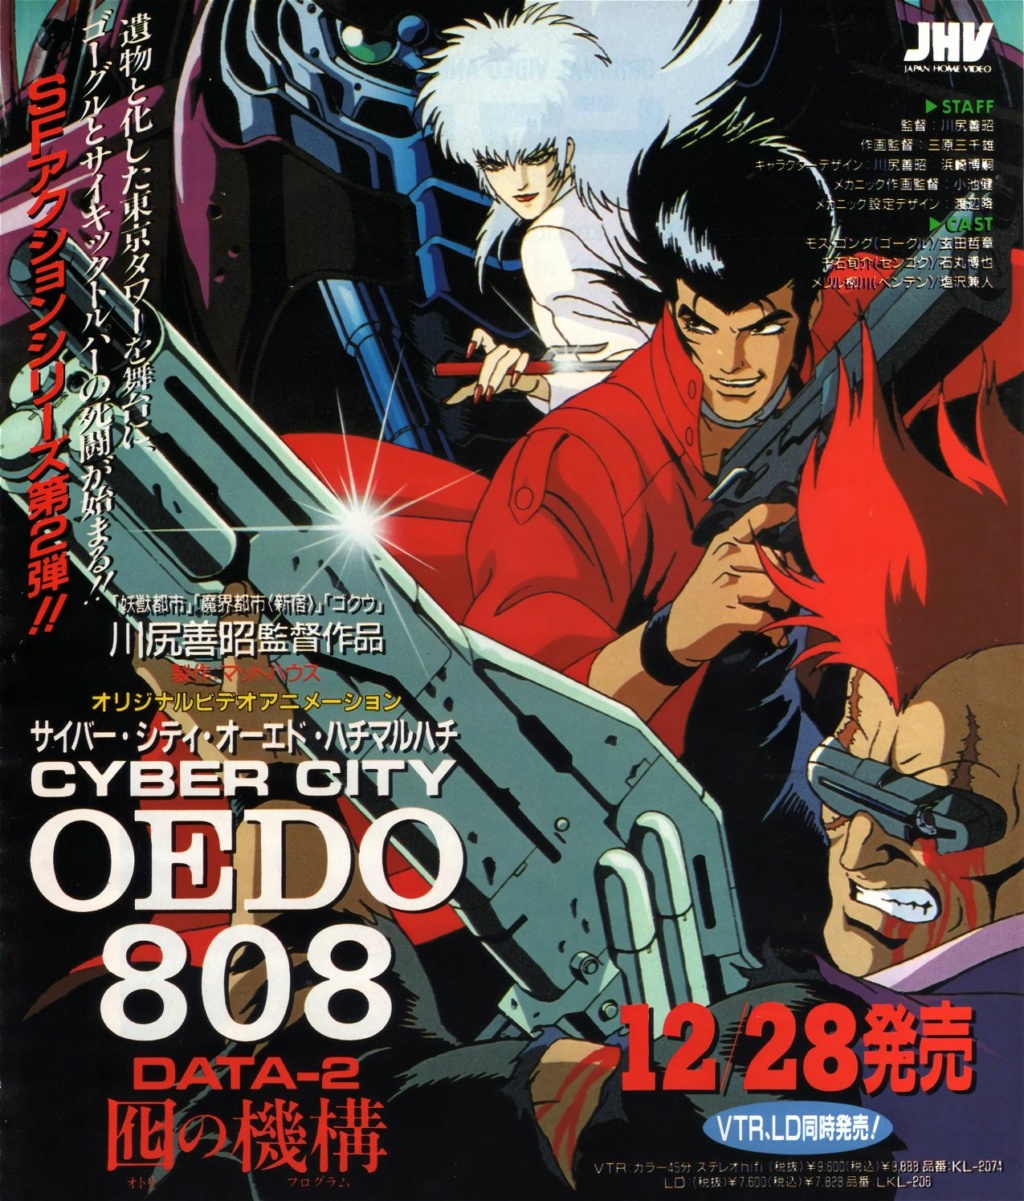 Cyber City Oedo 808 11111